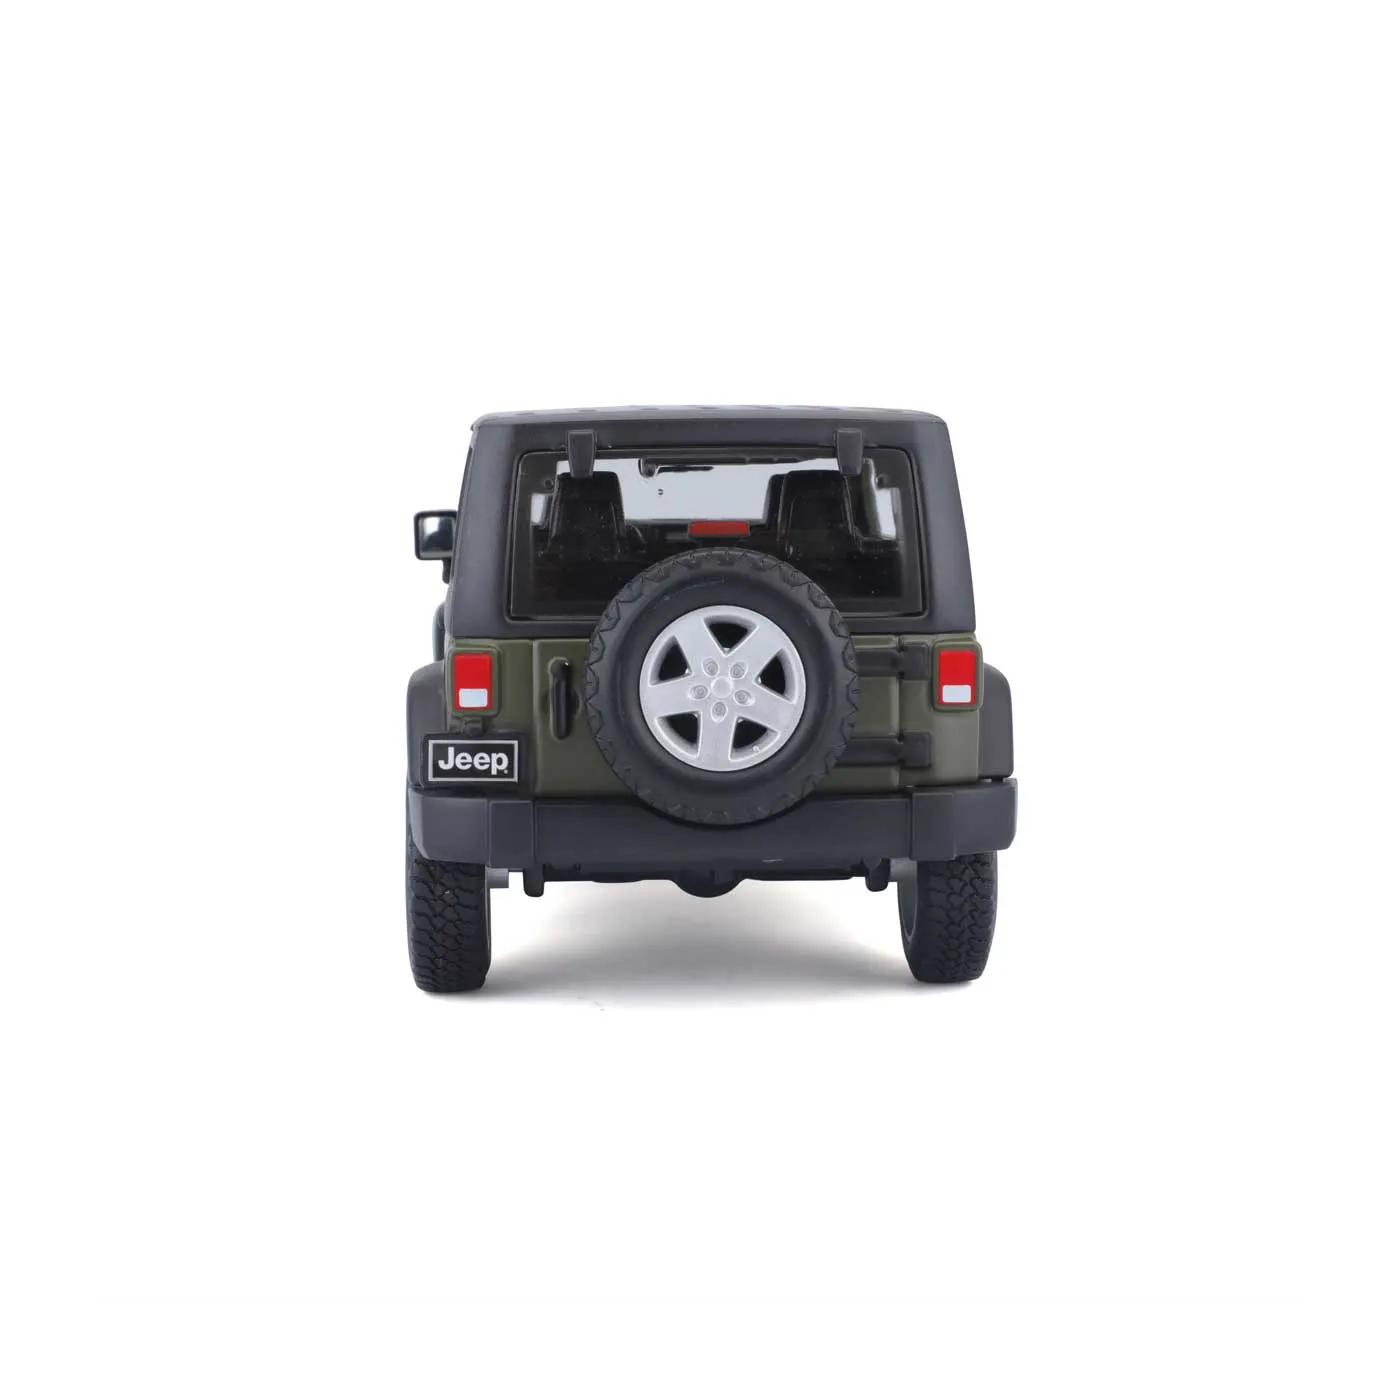 Carro de Juguete Trucks 2015 Jeep Wrangler Unlimited Verde 1:24 MAISTO